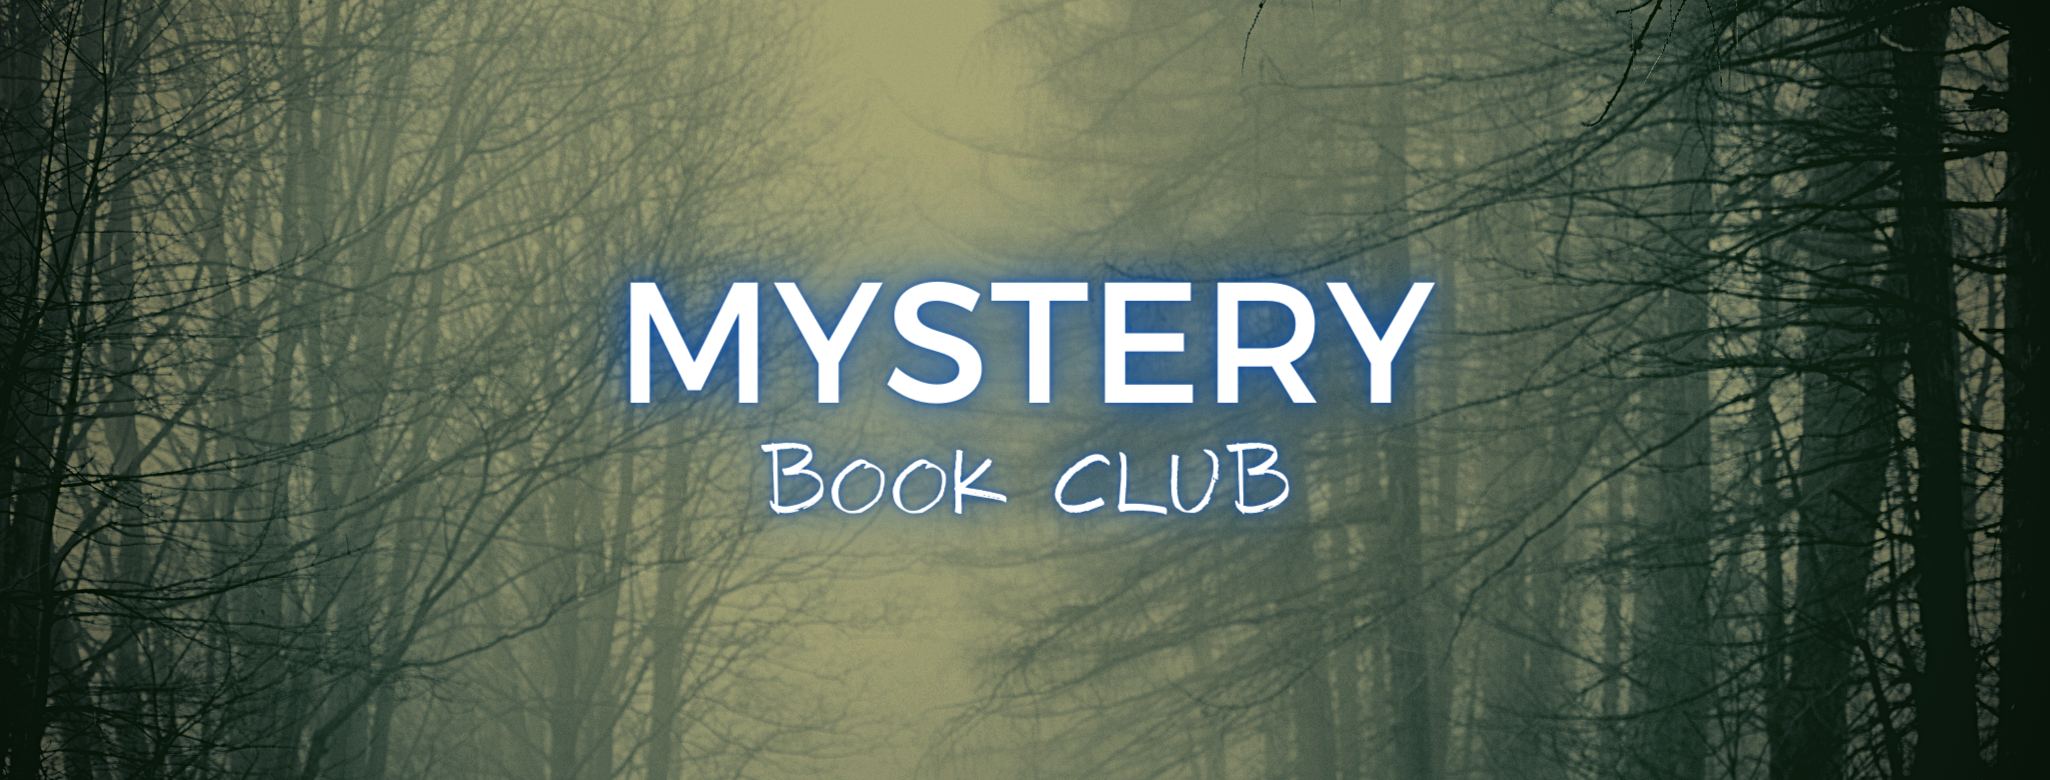 Mystery Book Club - Ipswich Public Library